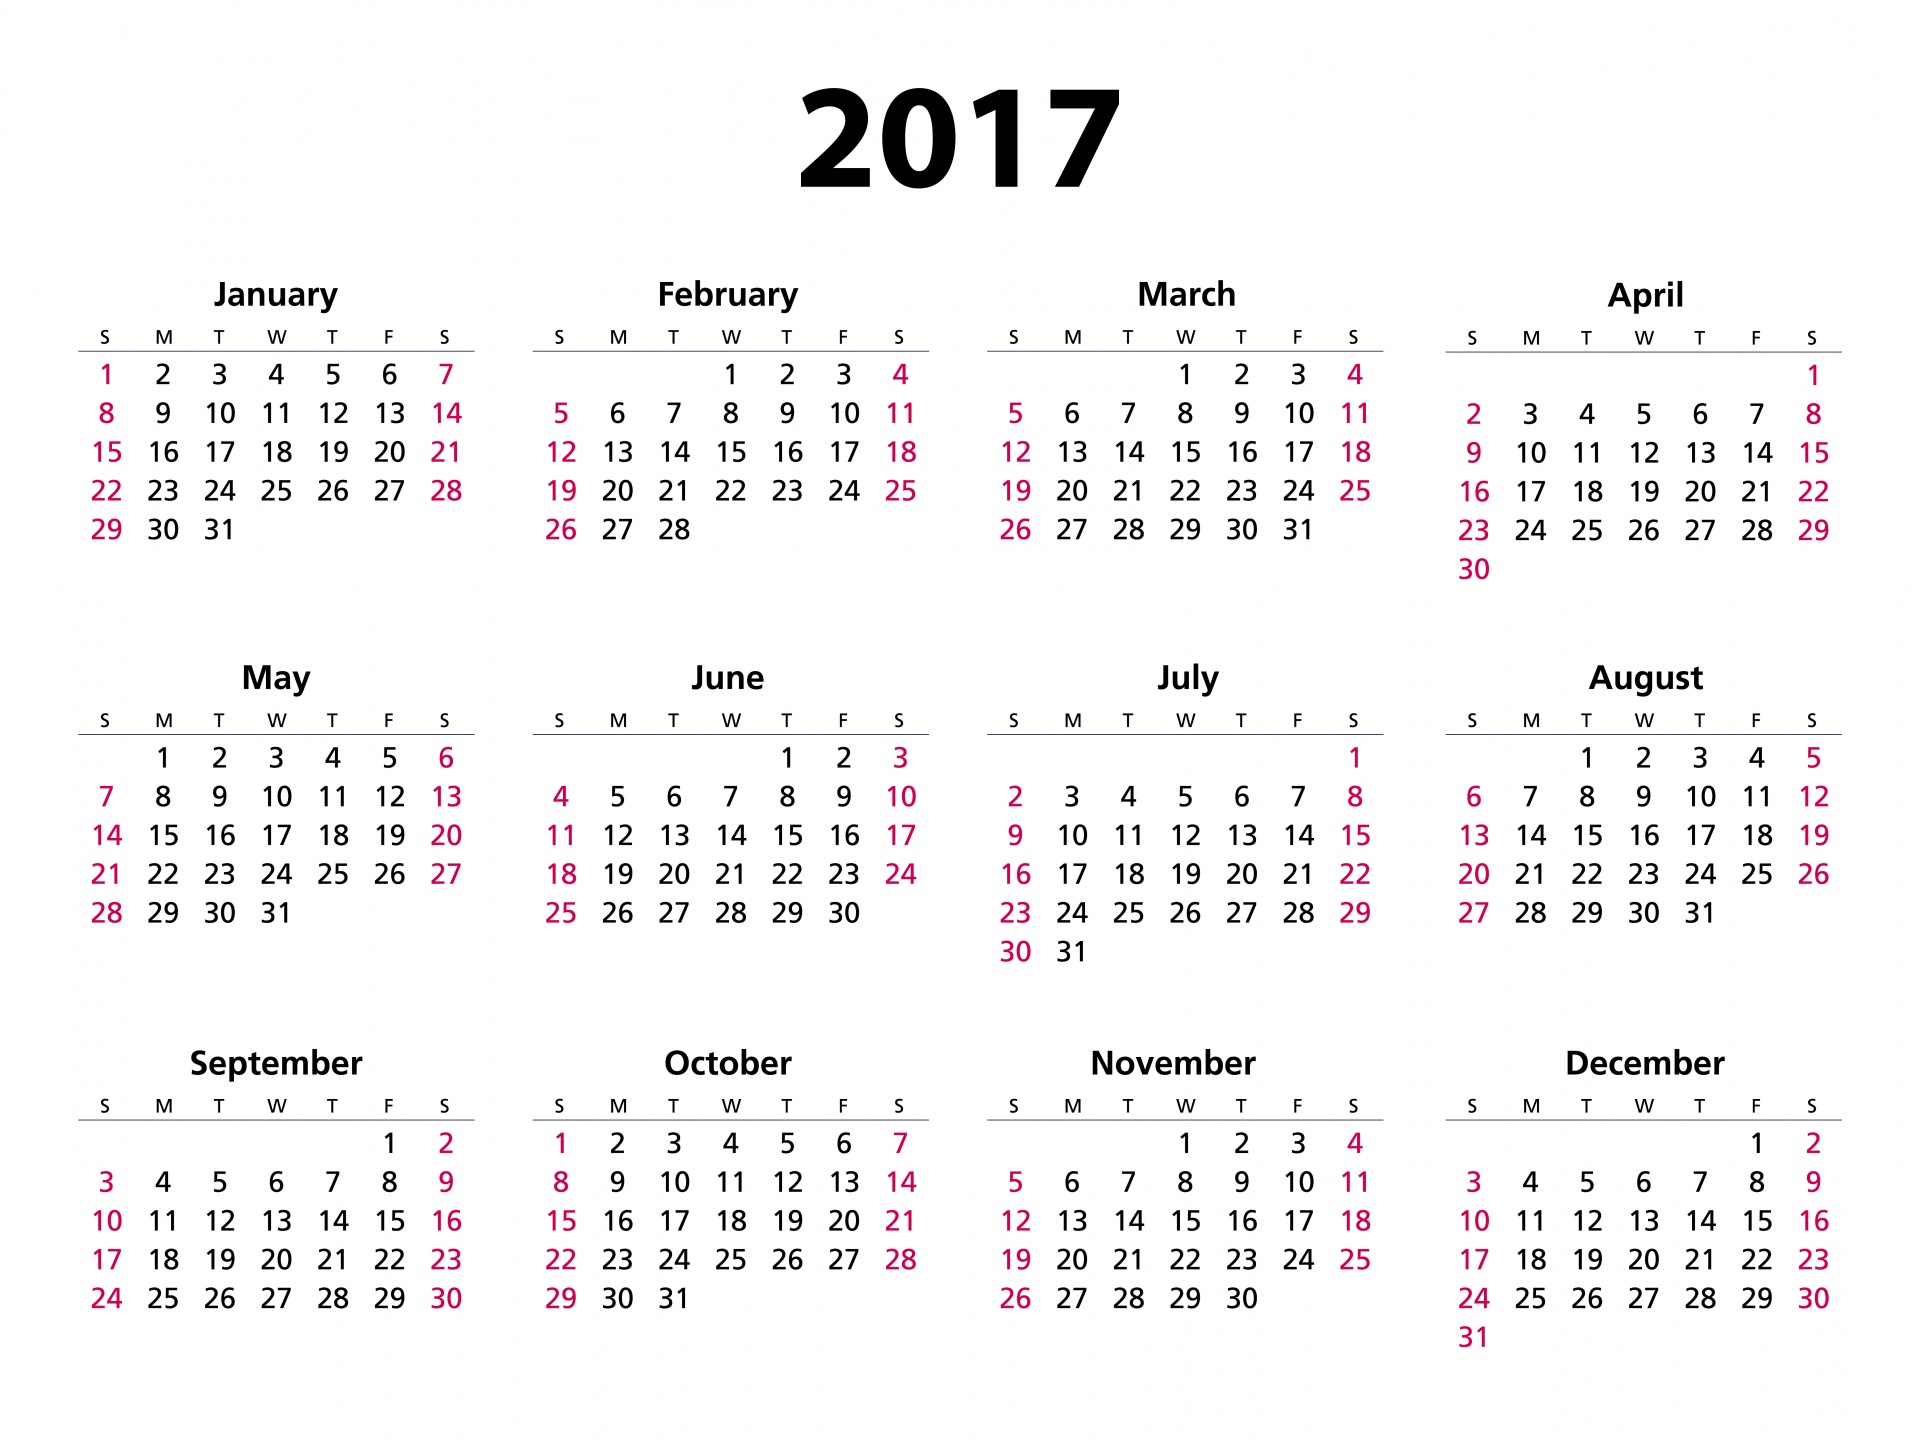 2017 nbsp kalendorius 2017 kalendorius nbsp 2017 nemokamos